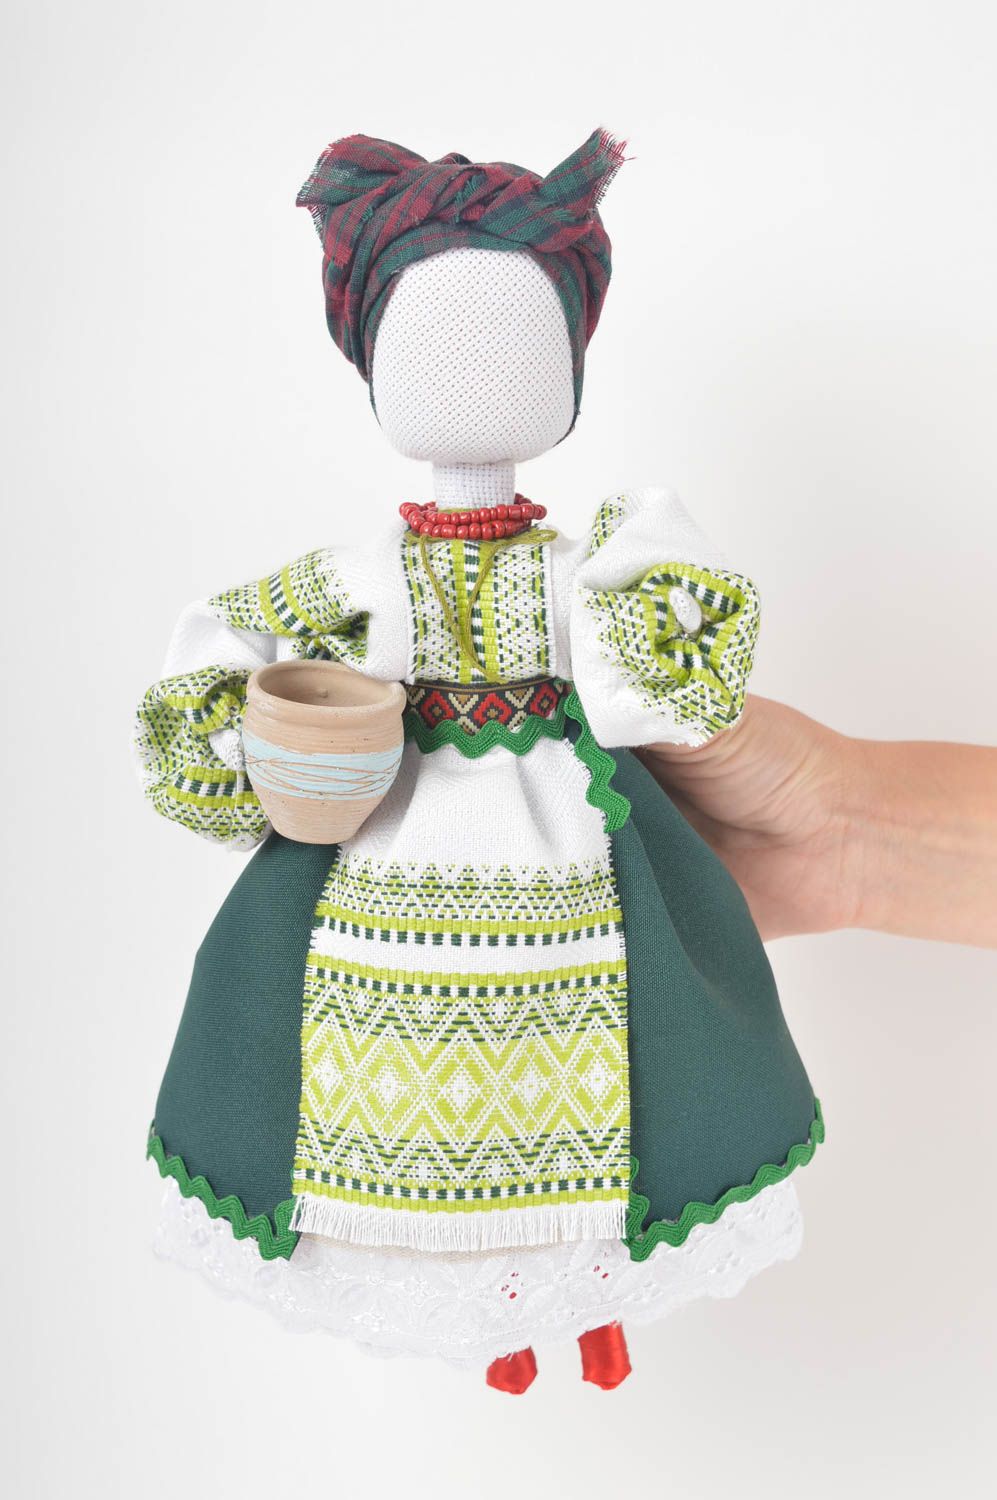 Handmade doll in ethnic dress stuffed toy designer childrens toy decor ideas photo 2